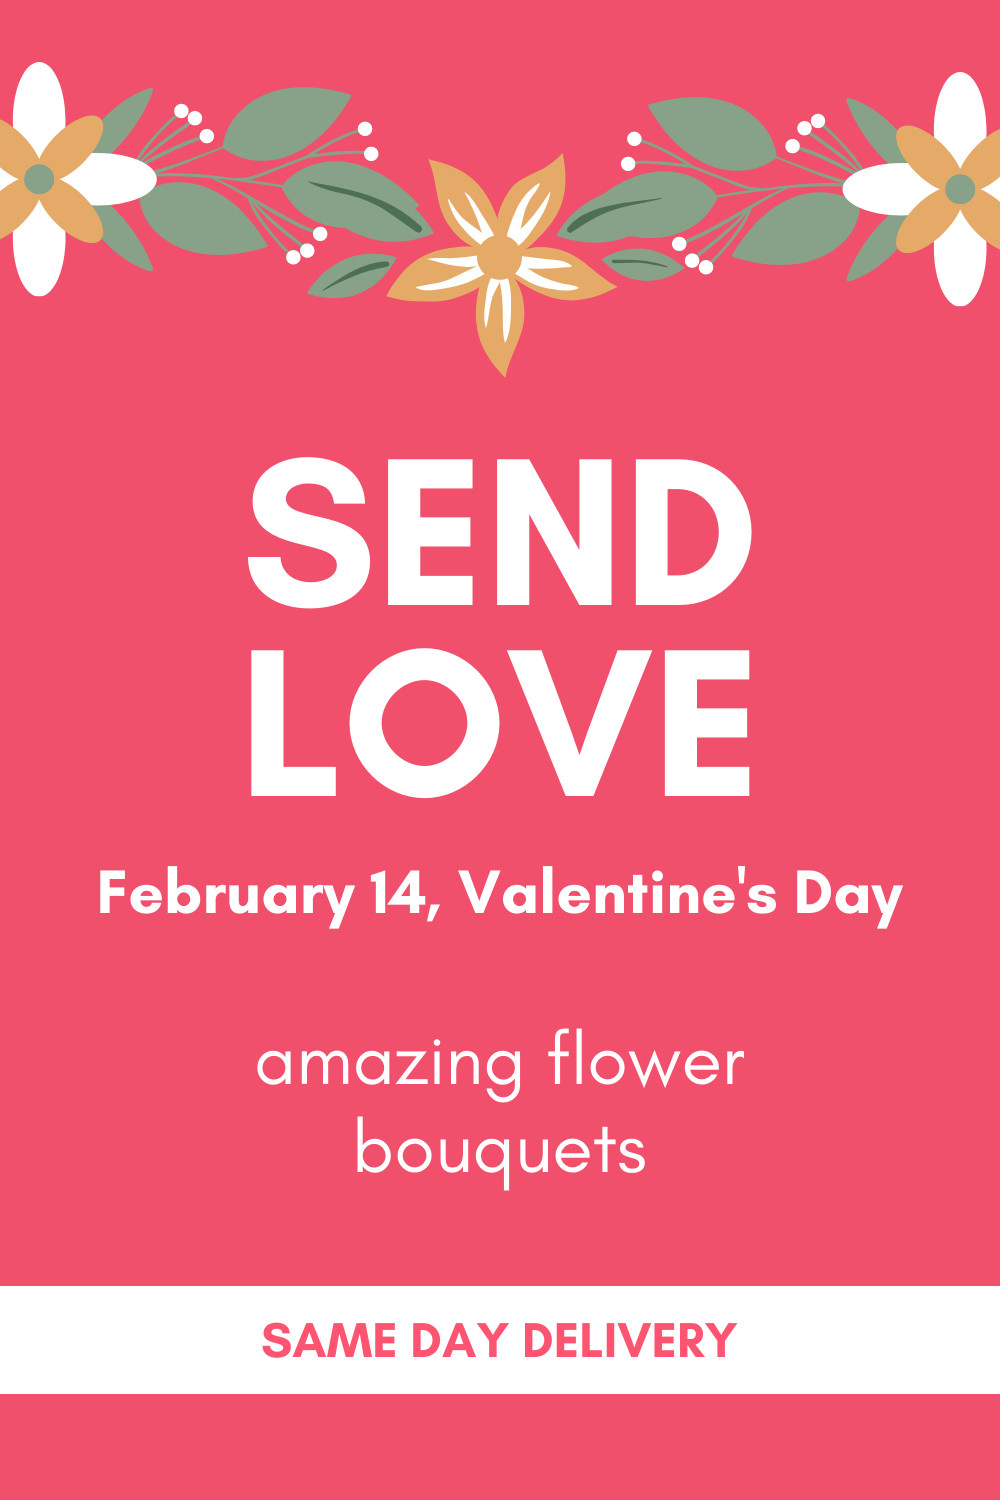 Send Valentine's Day Flower Love Facebook Cover 820x360